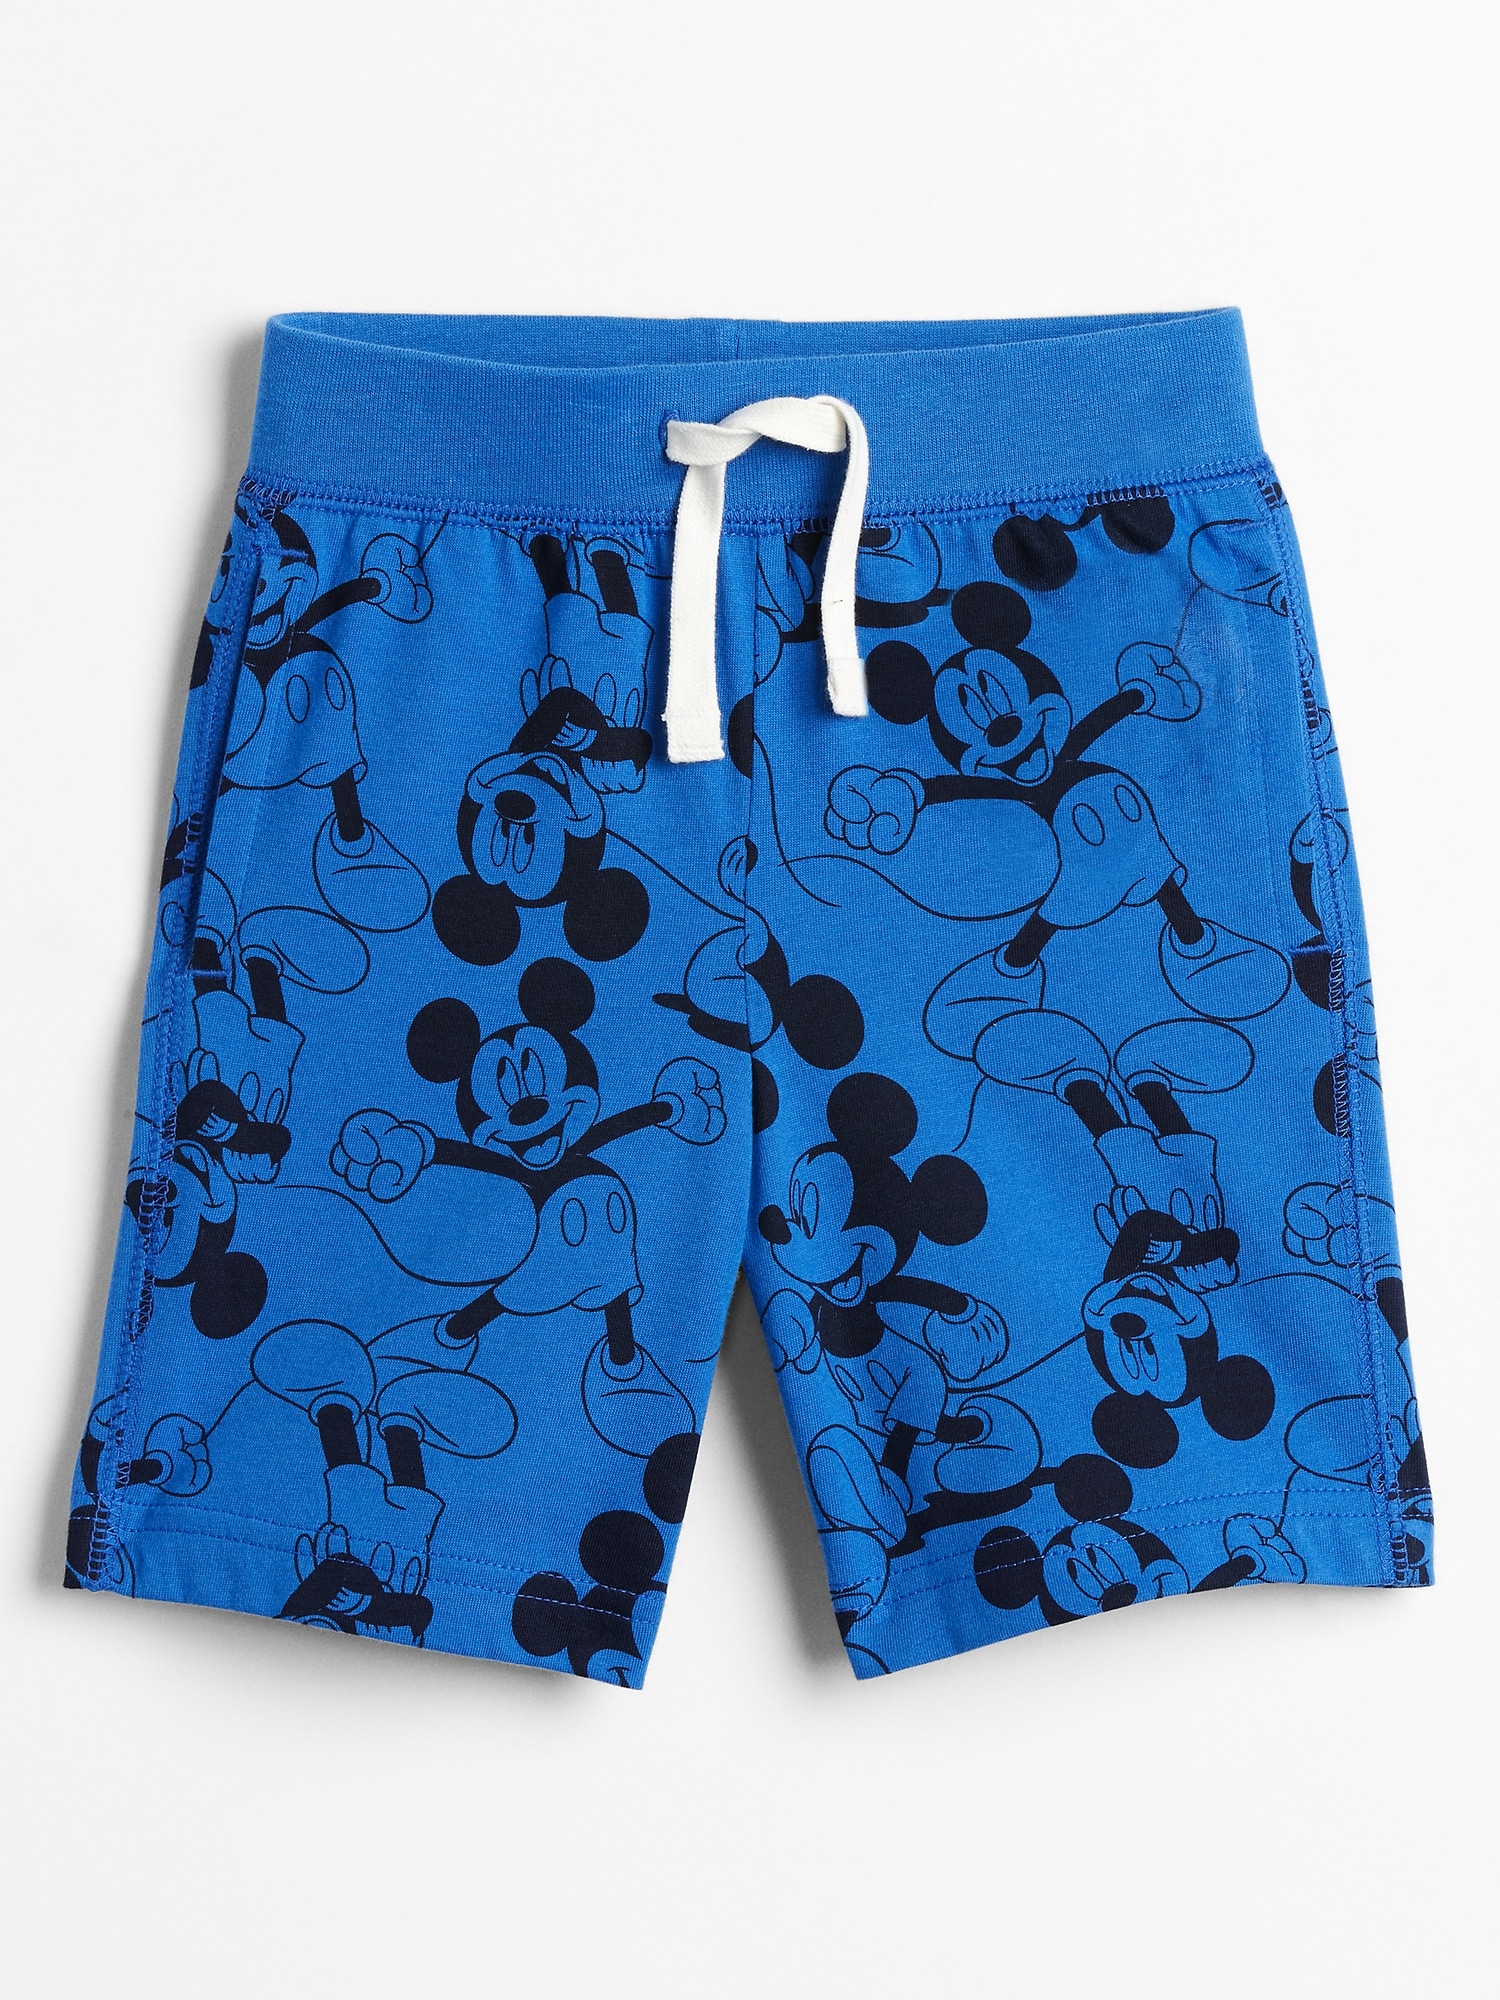 babyGap | Disney Mickey Mouse Shorts | Gap Factory